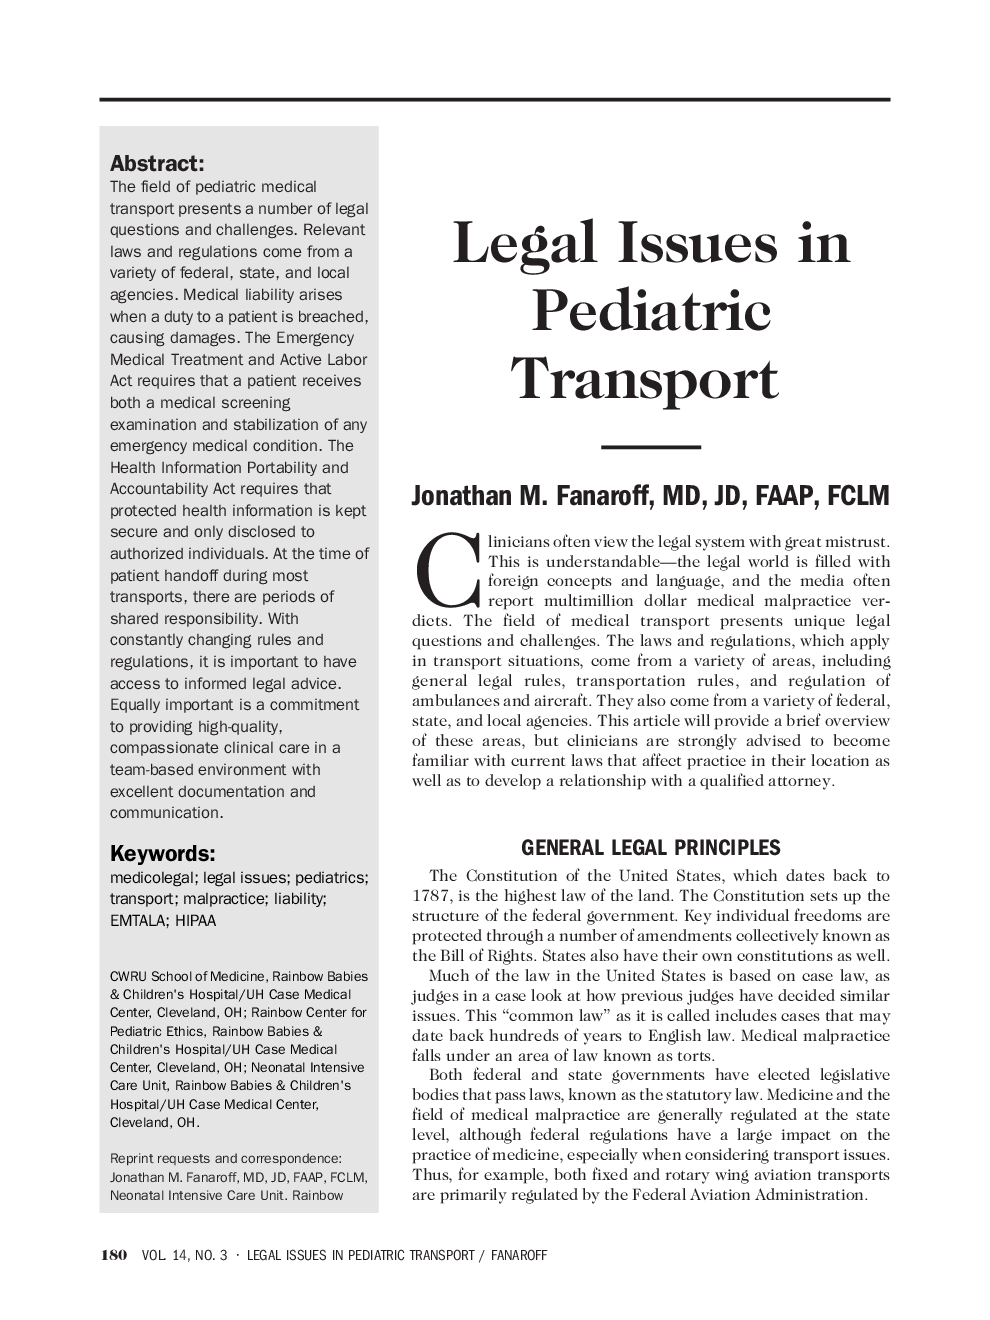 Legal Issues in Pediatric Transport